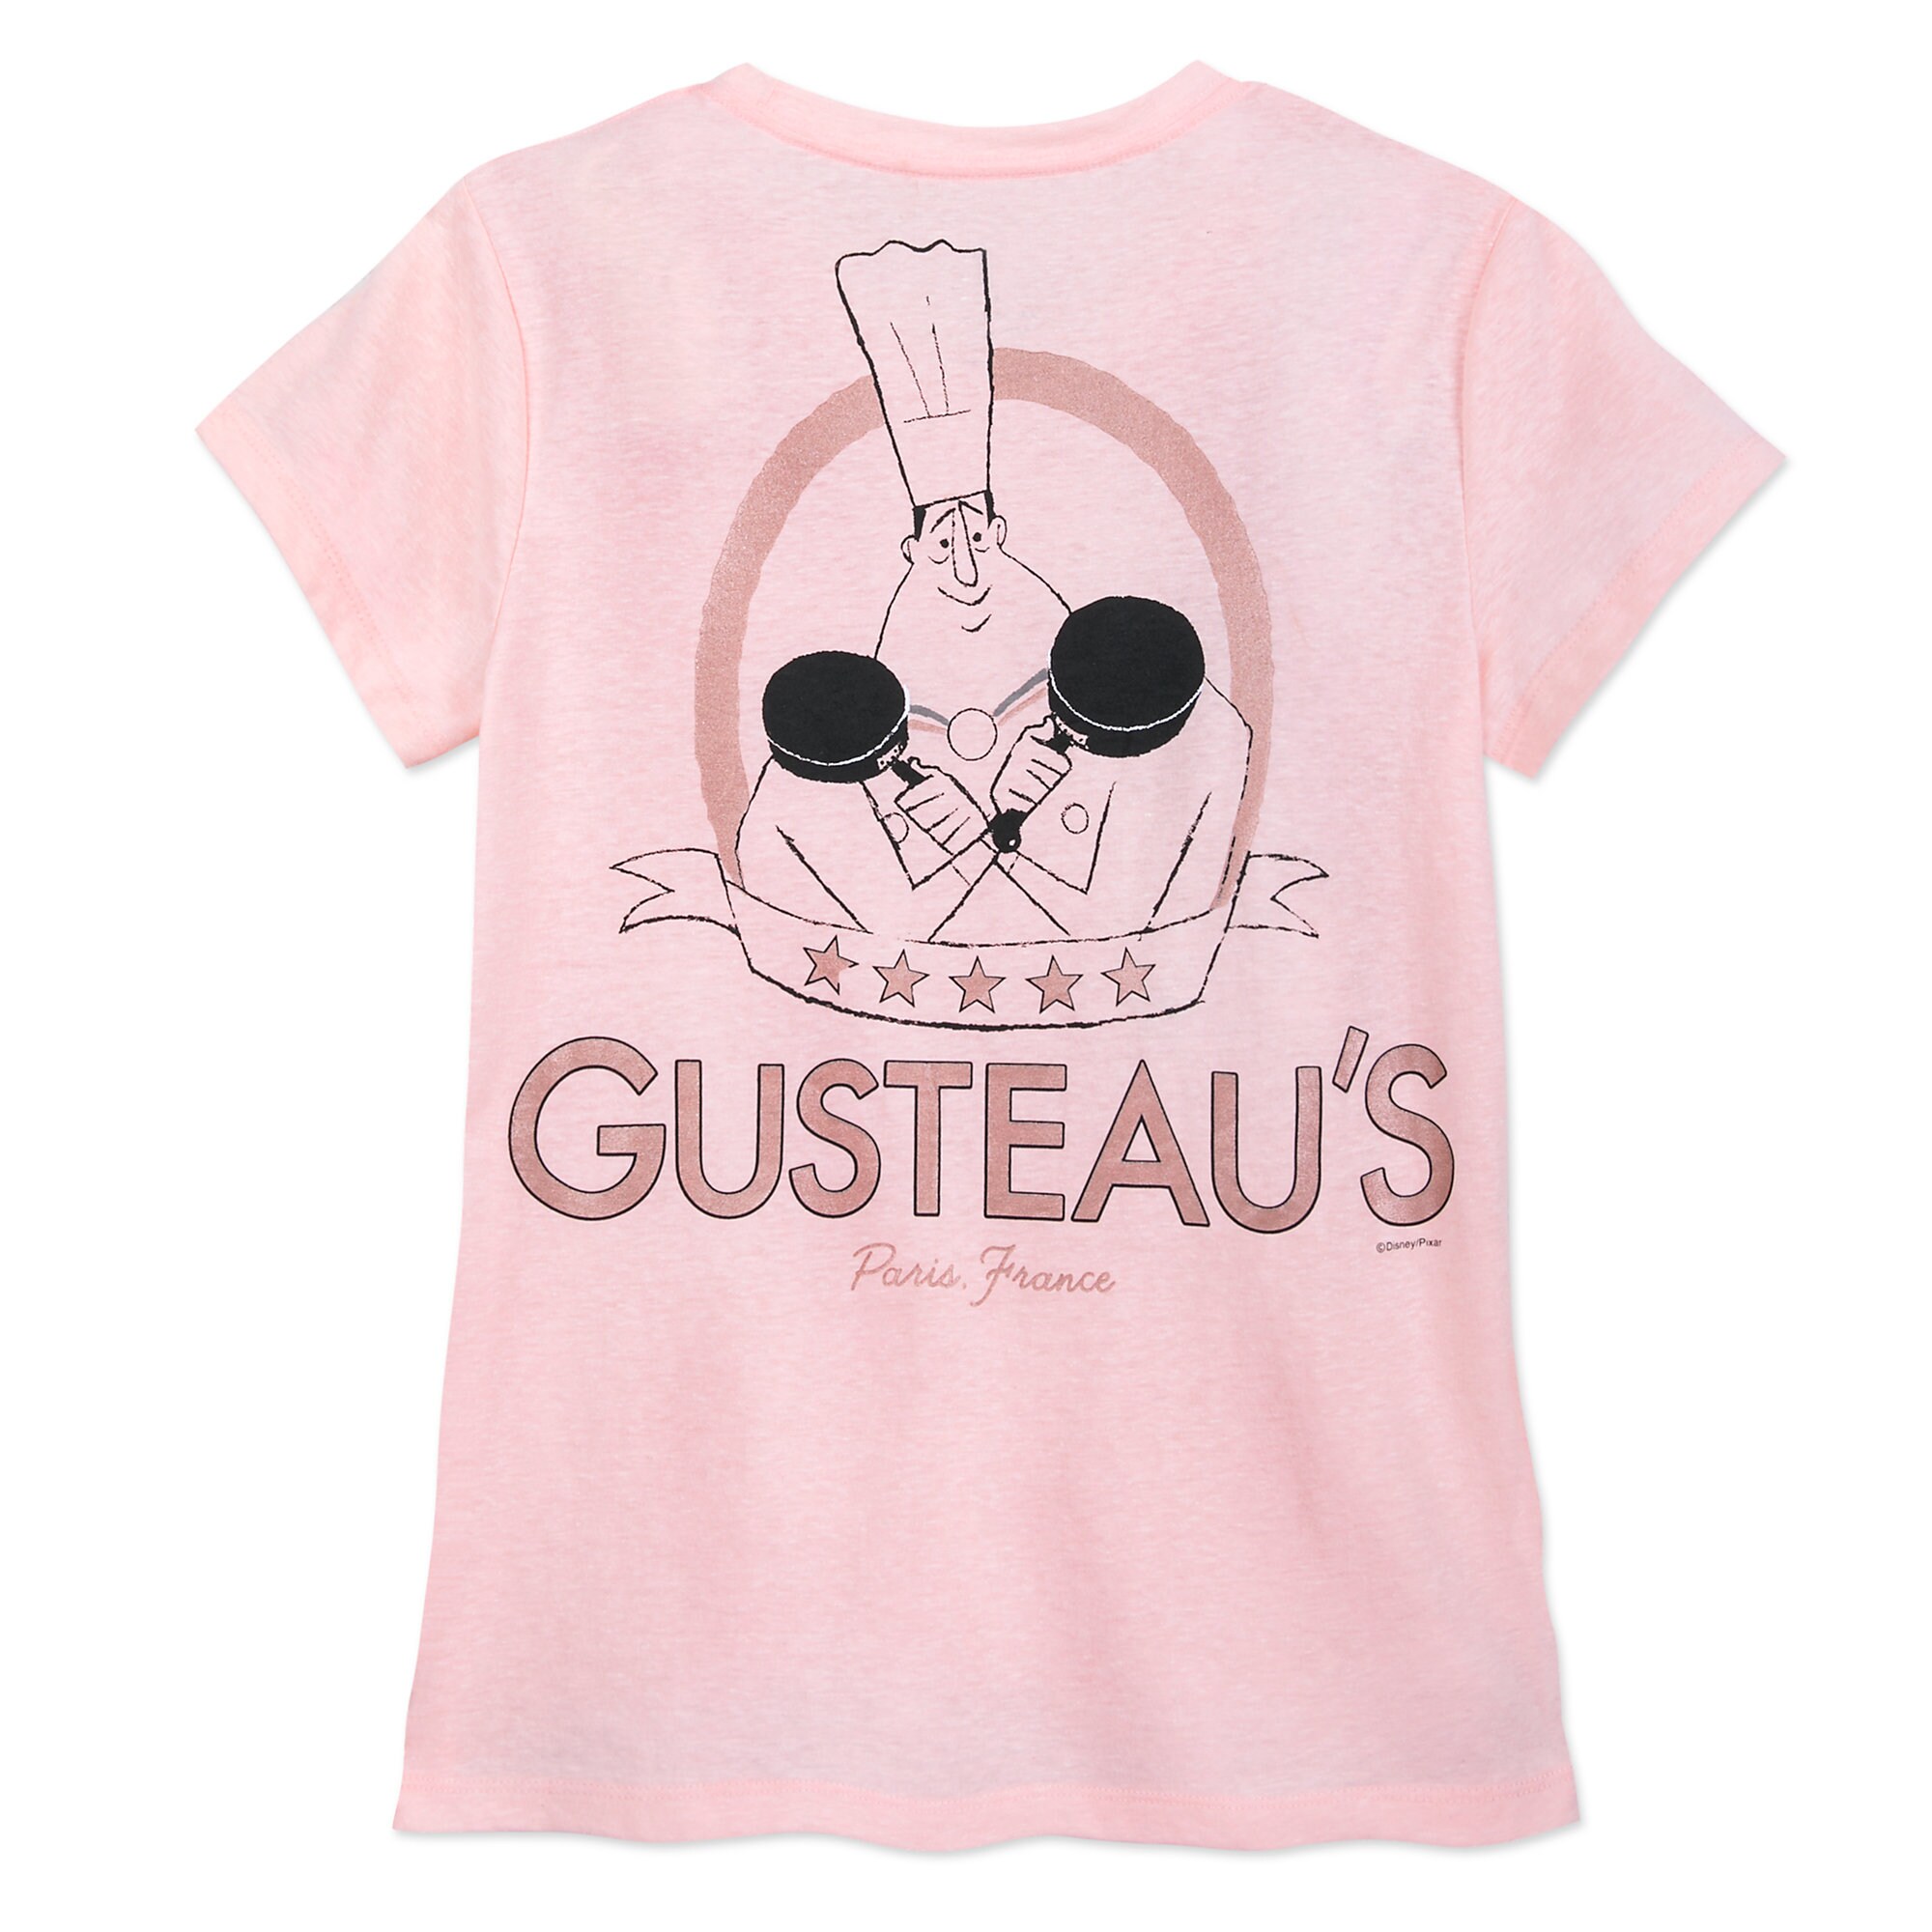 Gusteau's T-Shirt for Women - Ratatouille